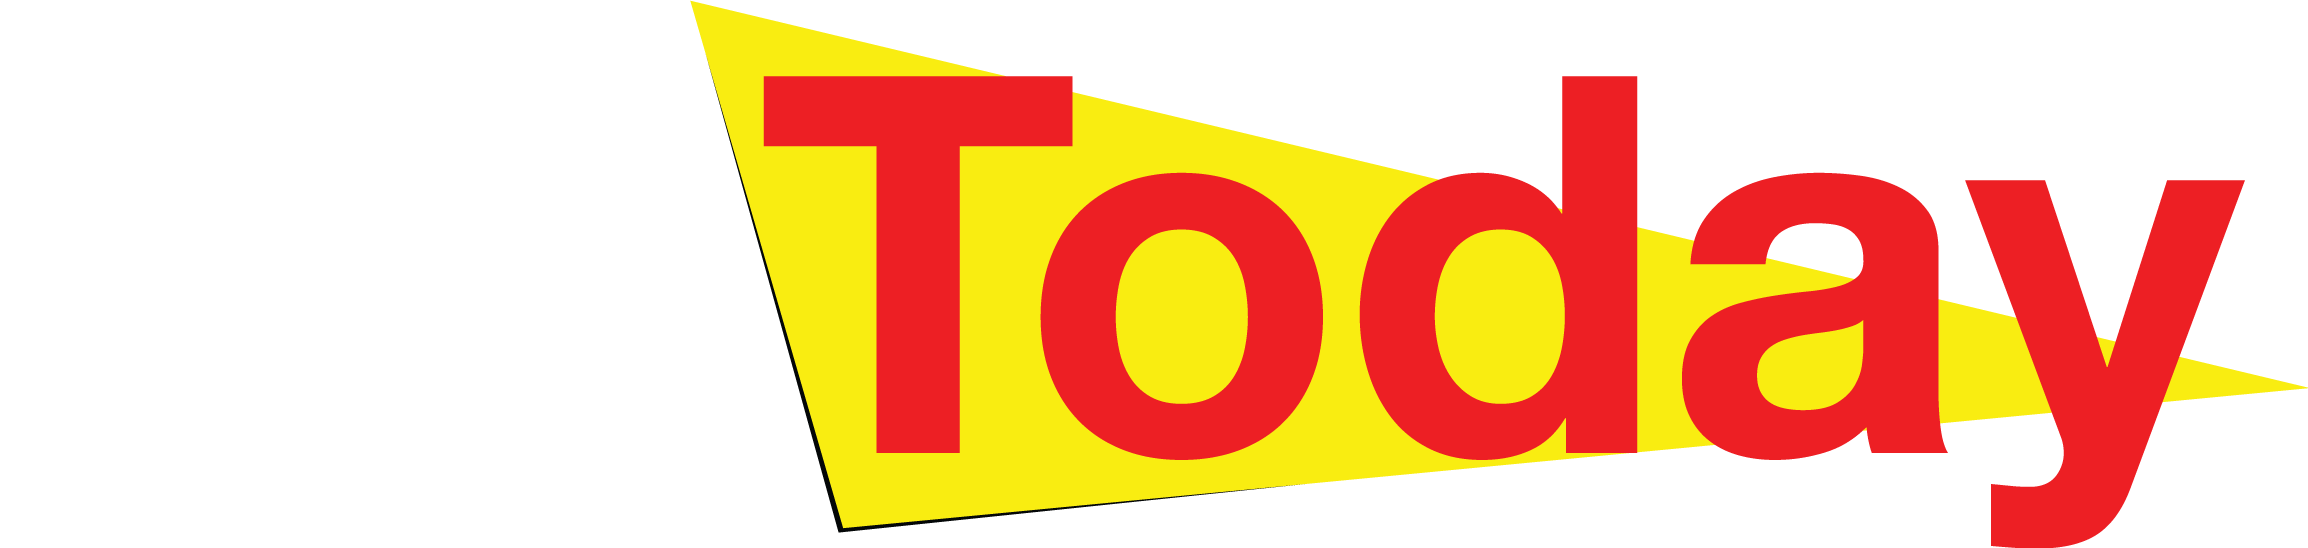 UgToday Logo